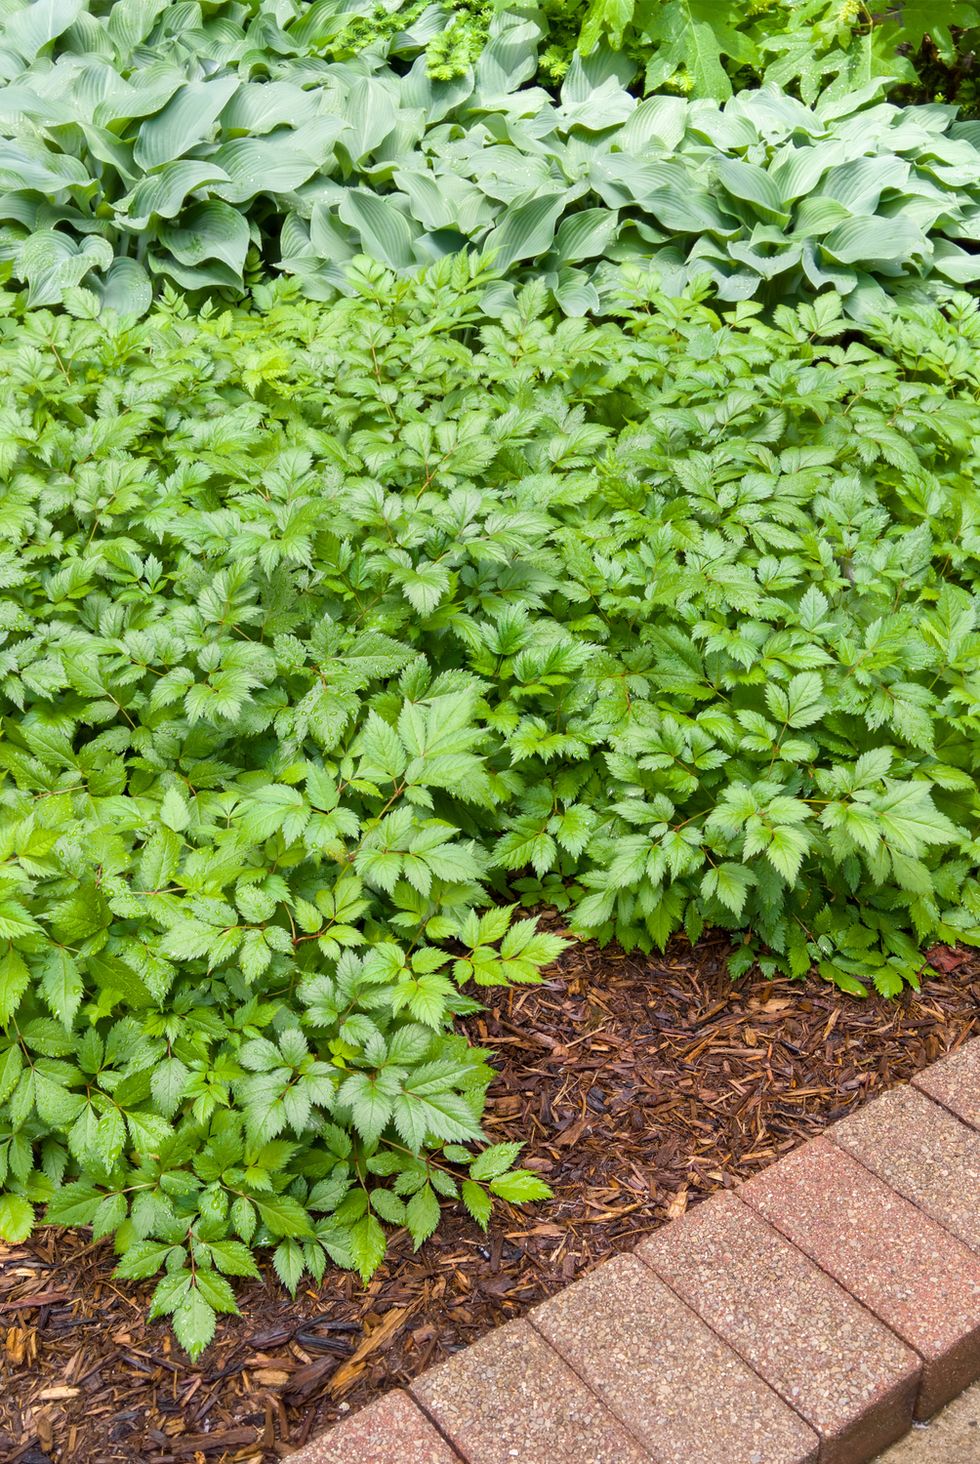 Green leafy garden plants with brick border